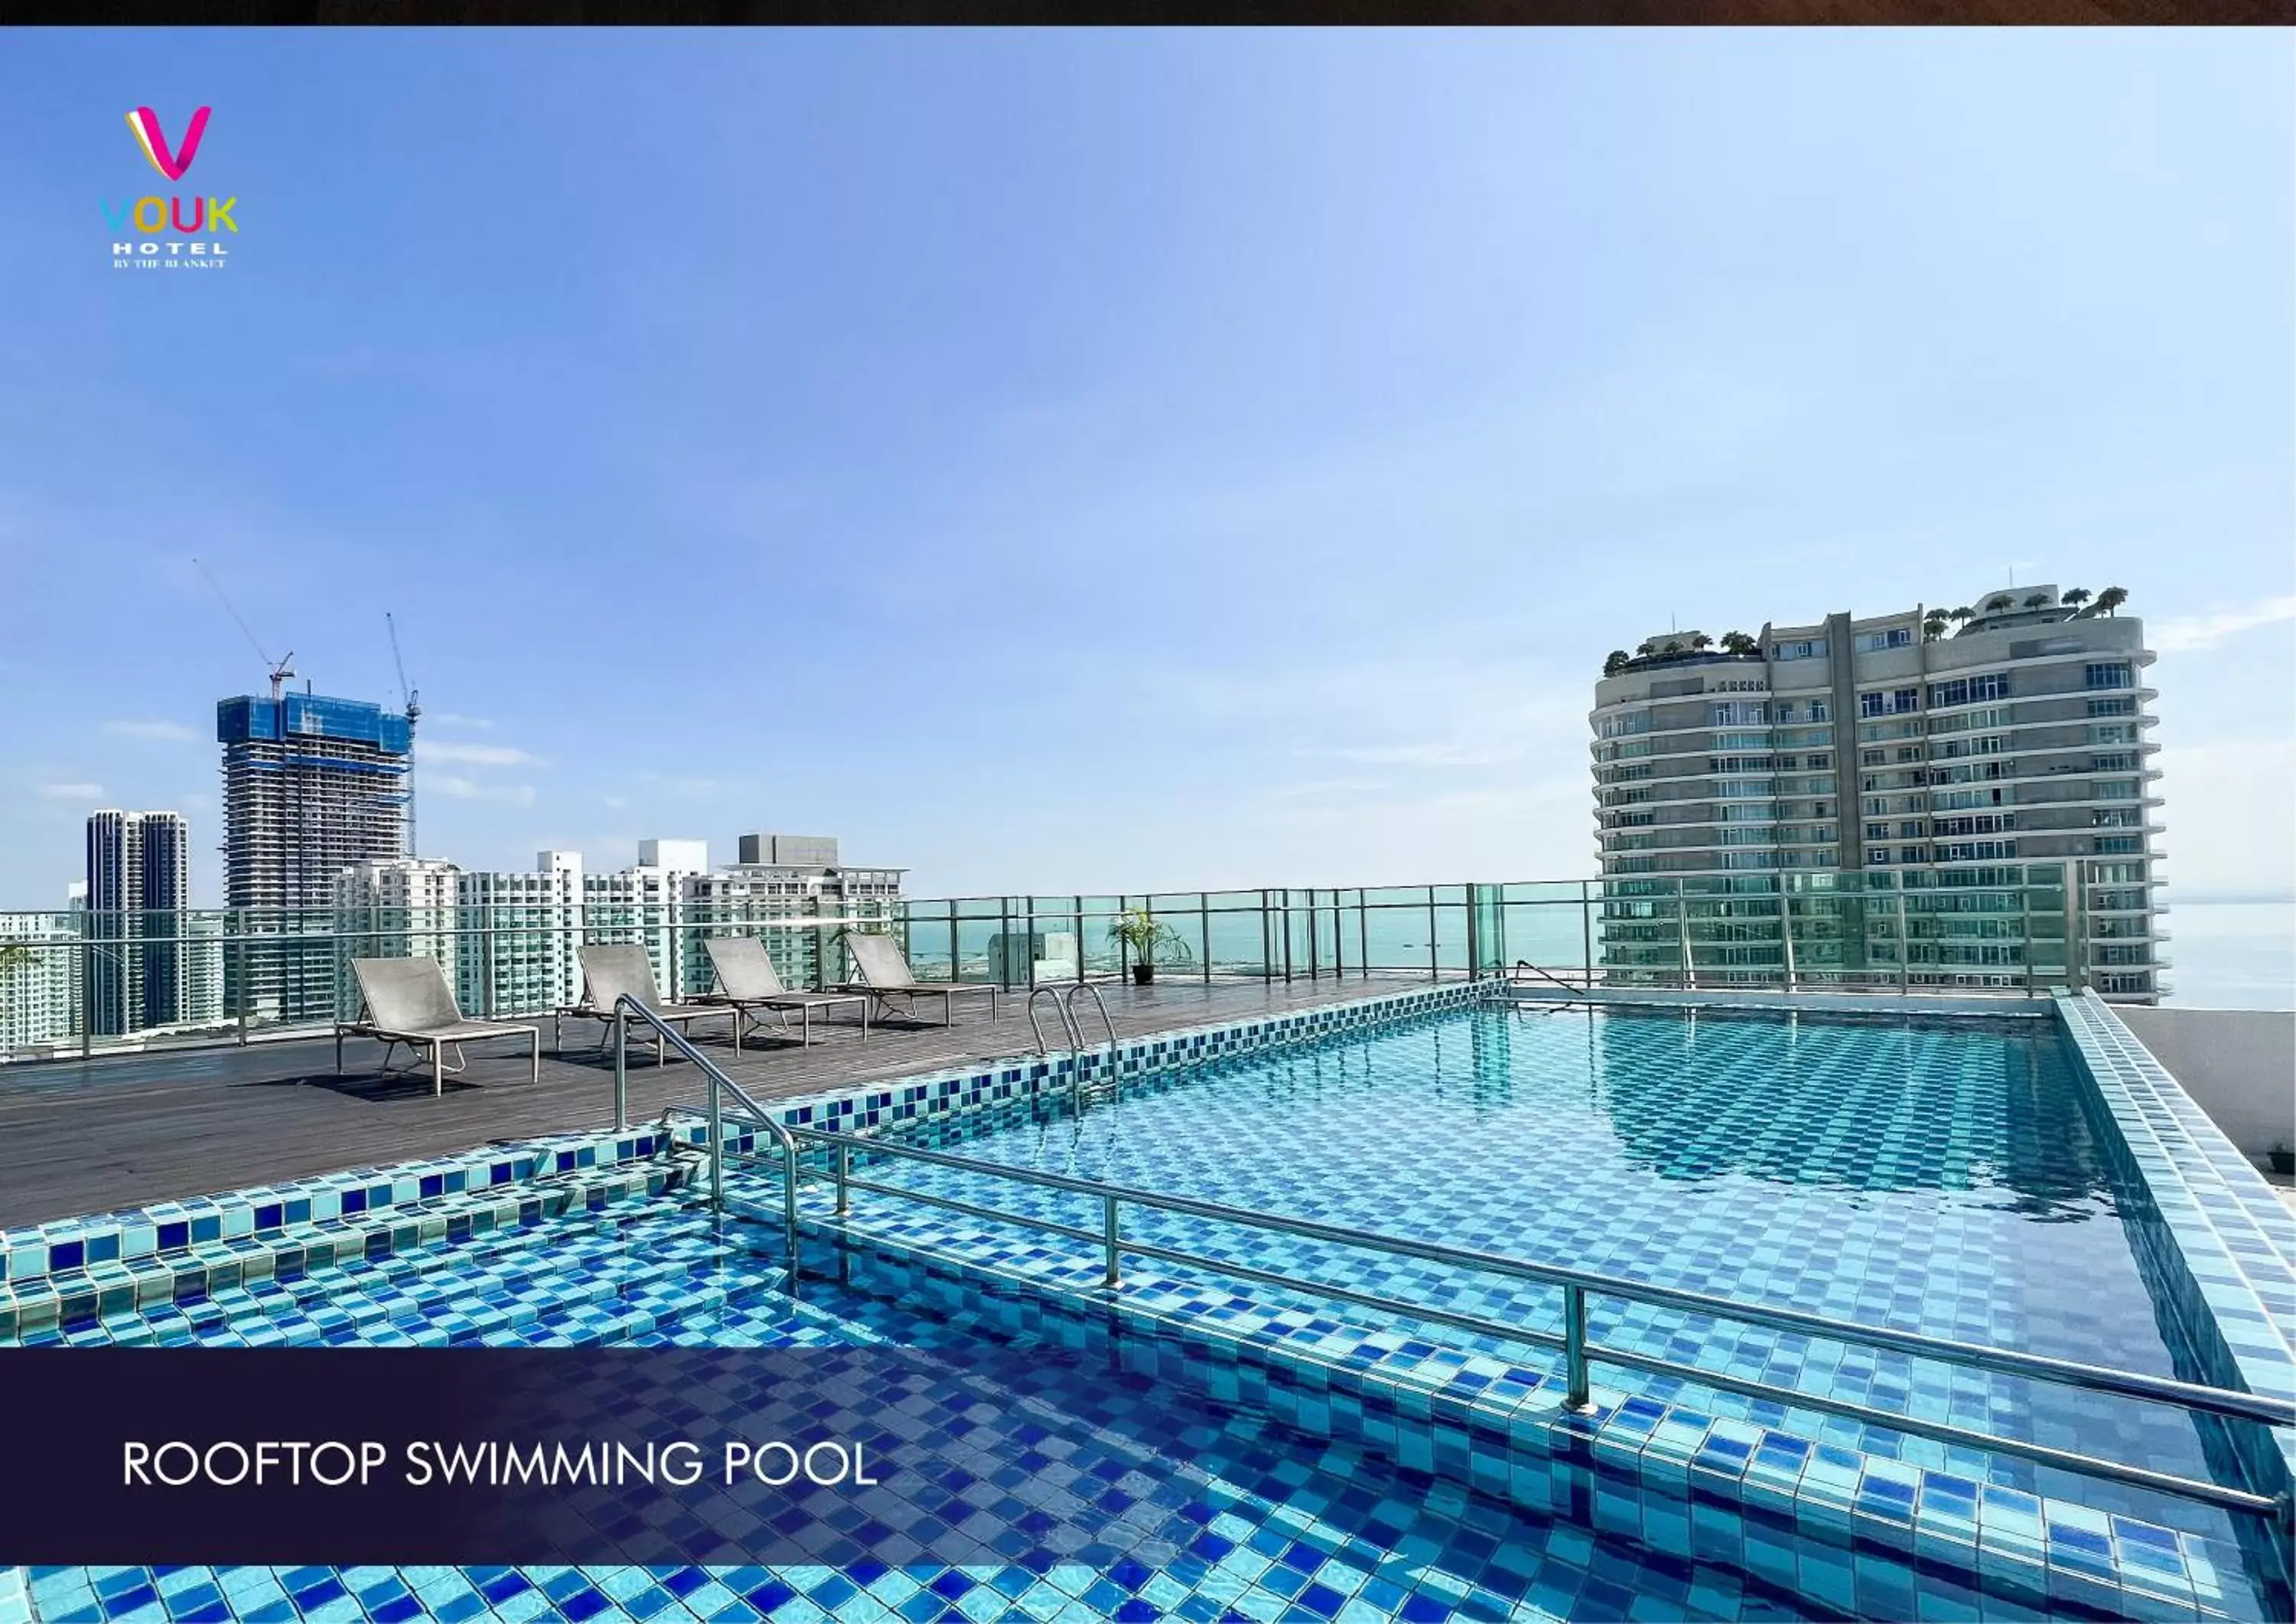 Swimming Pool in Vouk Hotel Suites, Penang